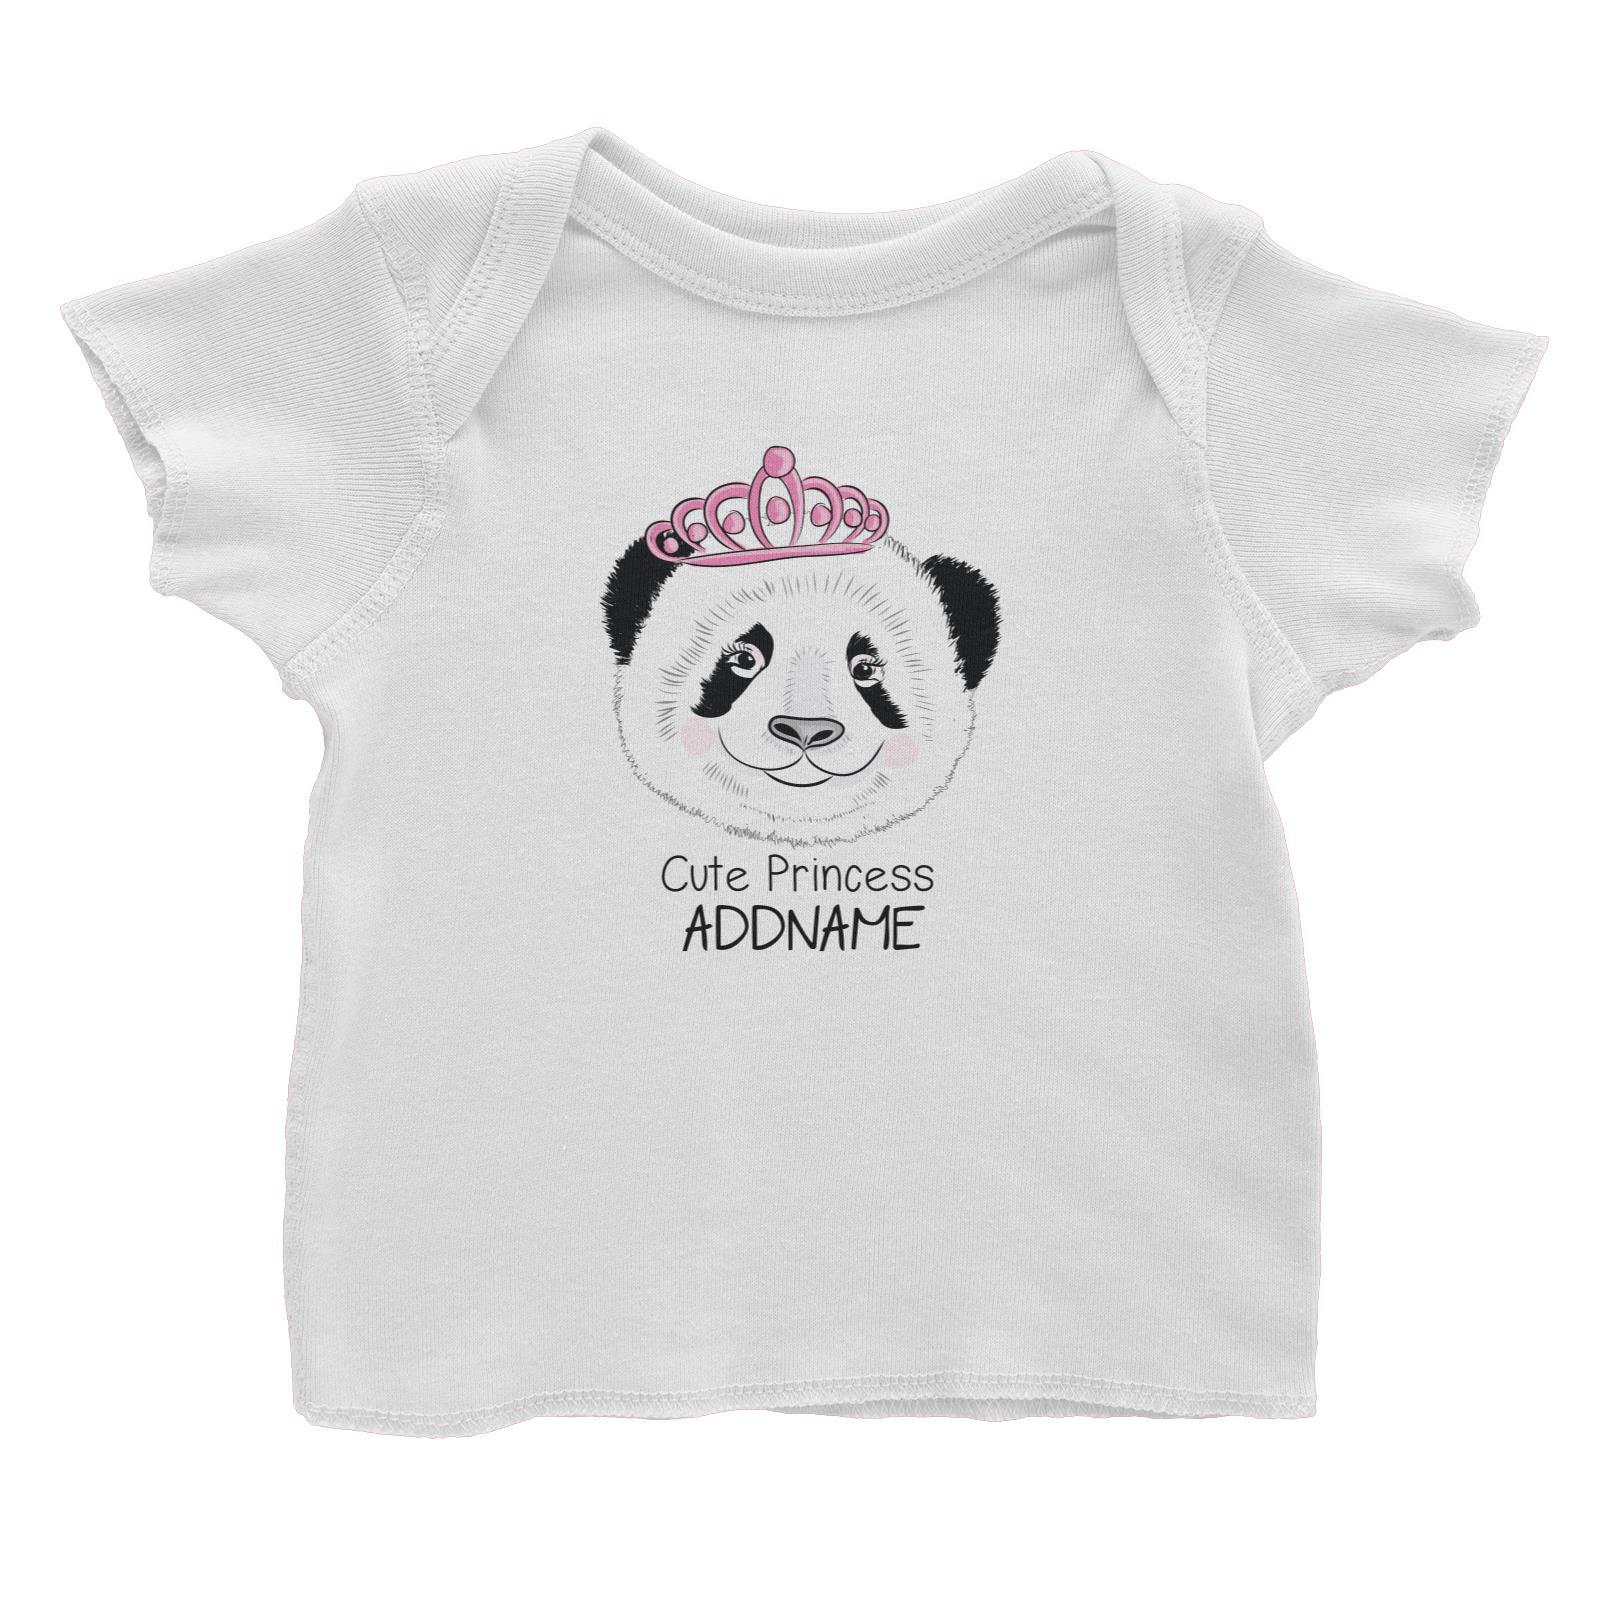 Cool Vibrant Series Cute Princess Panda Addname Baby T-Shirt